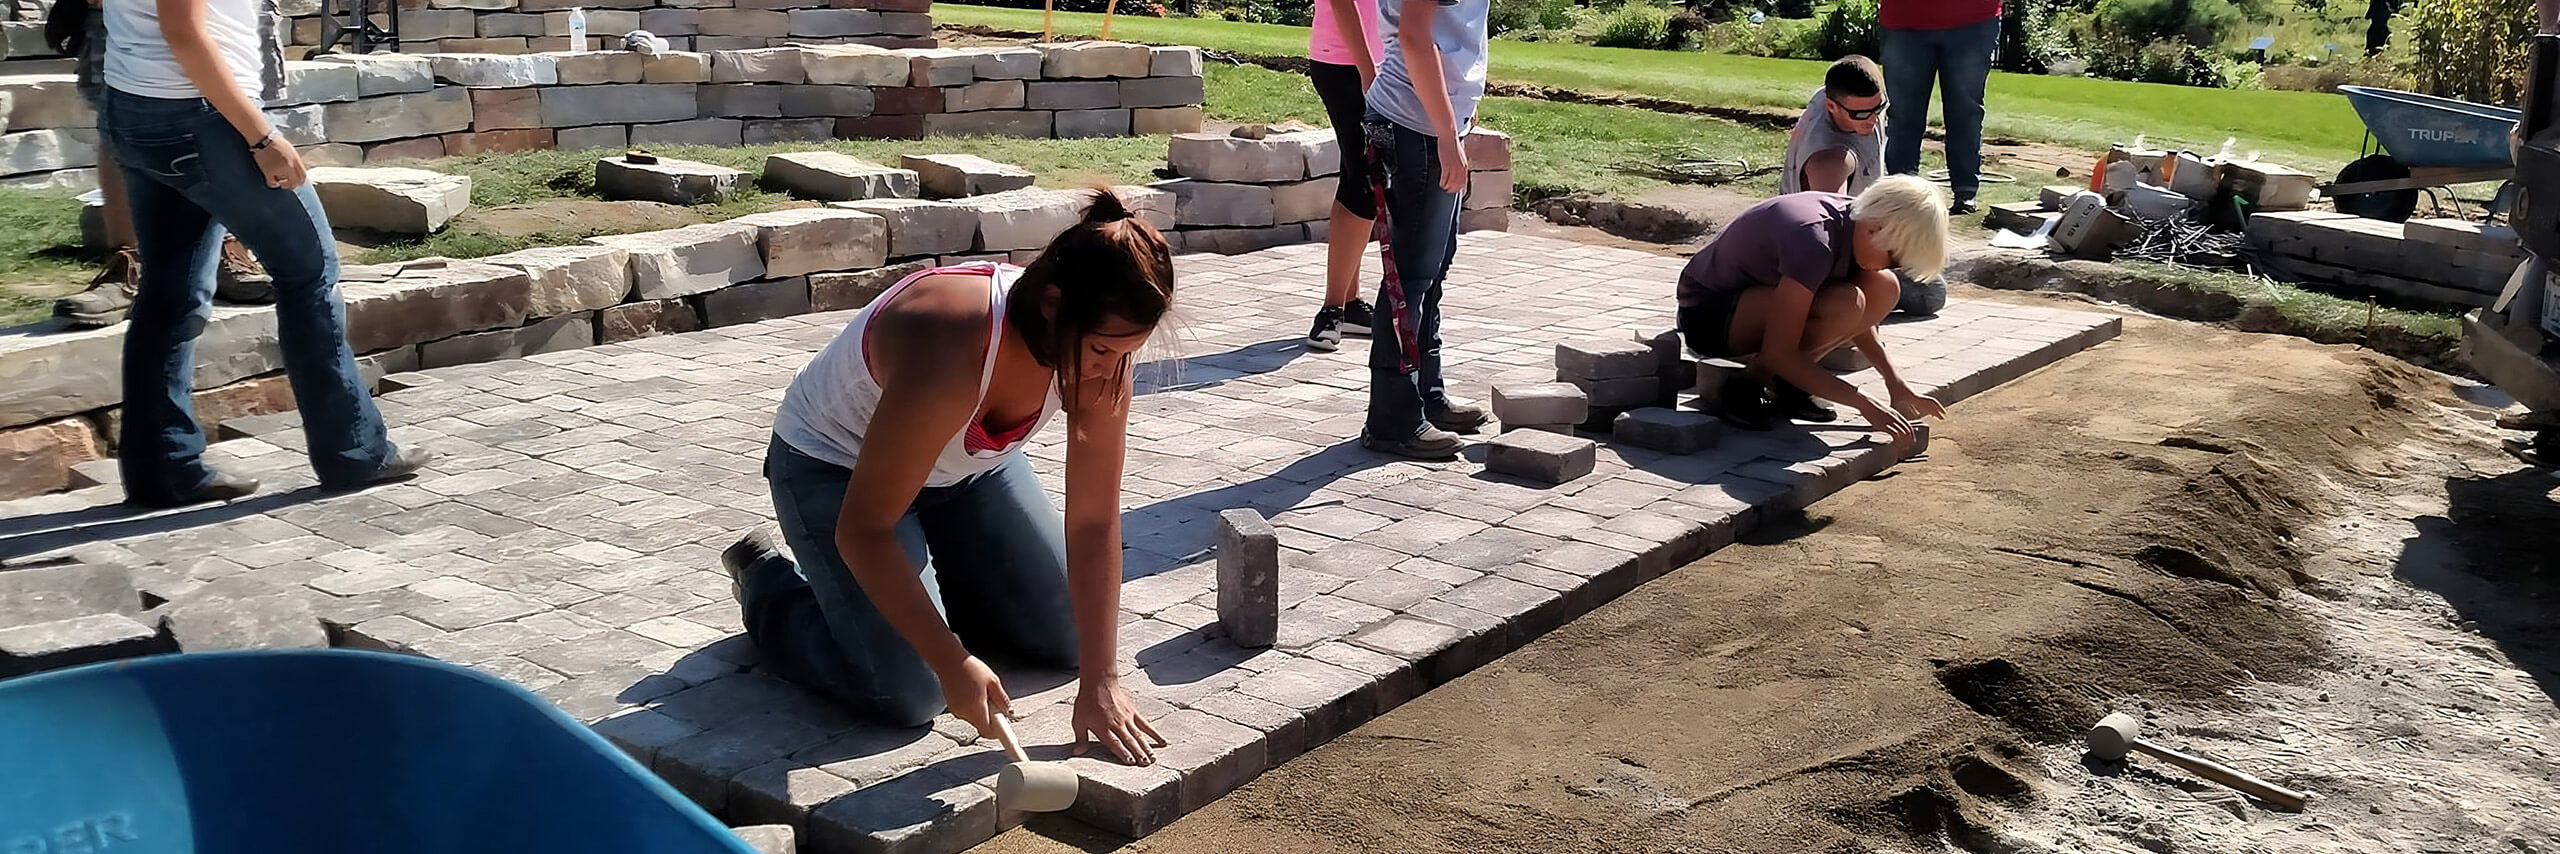 Students work on paving bricks.